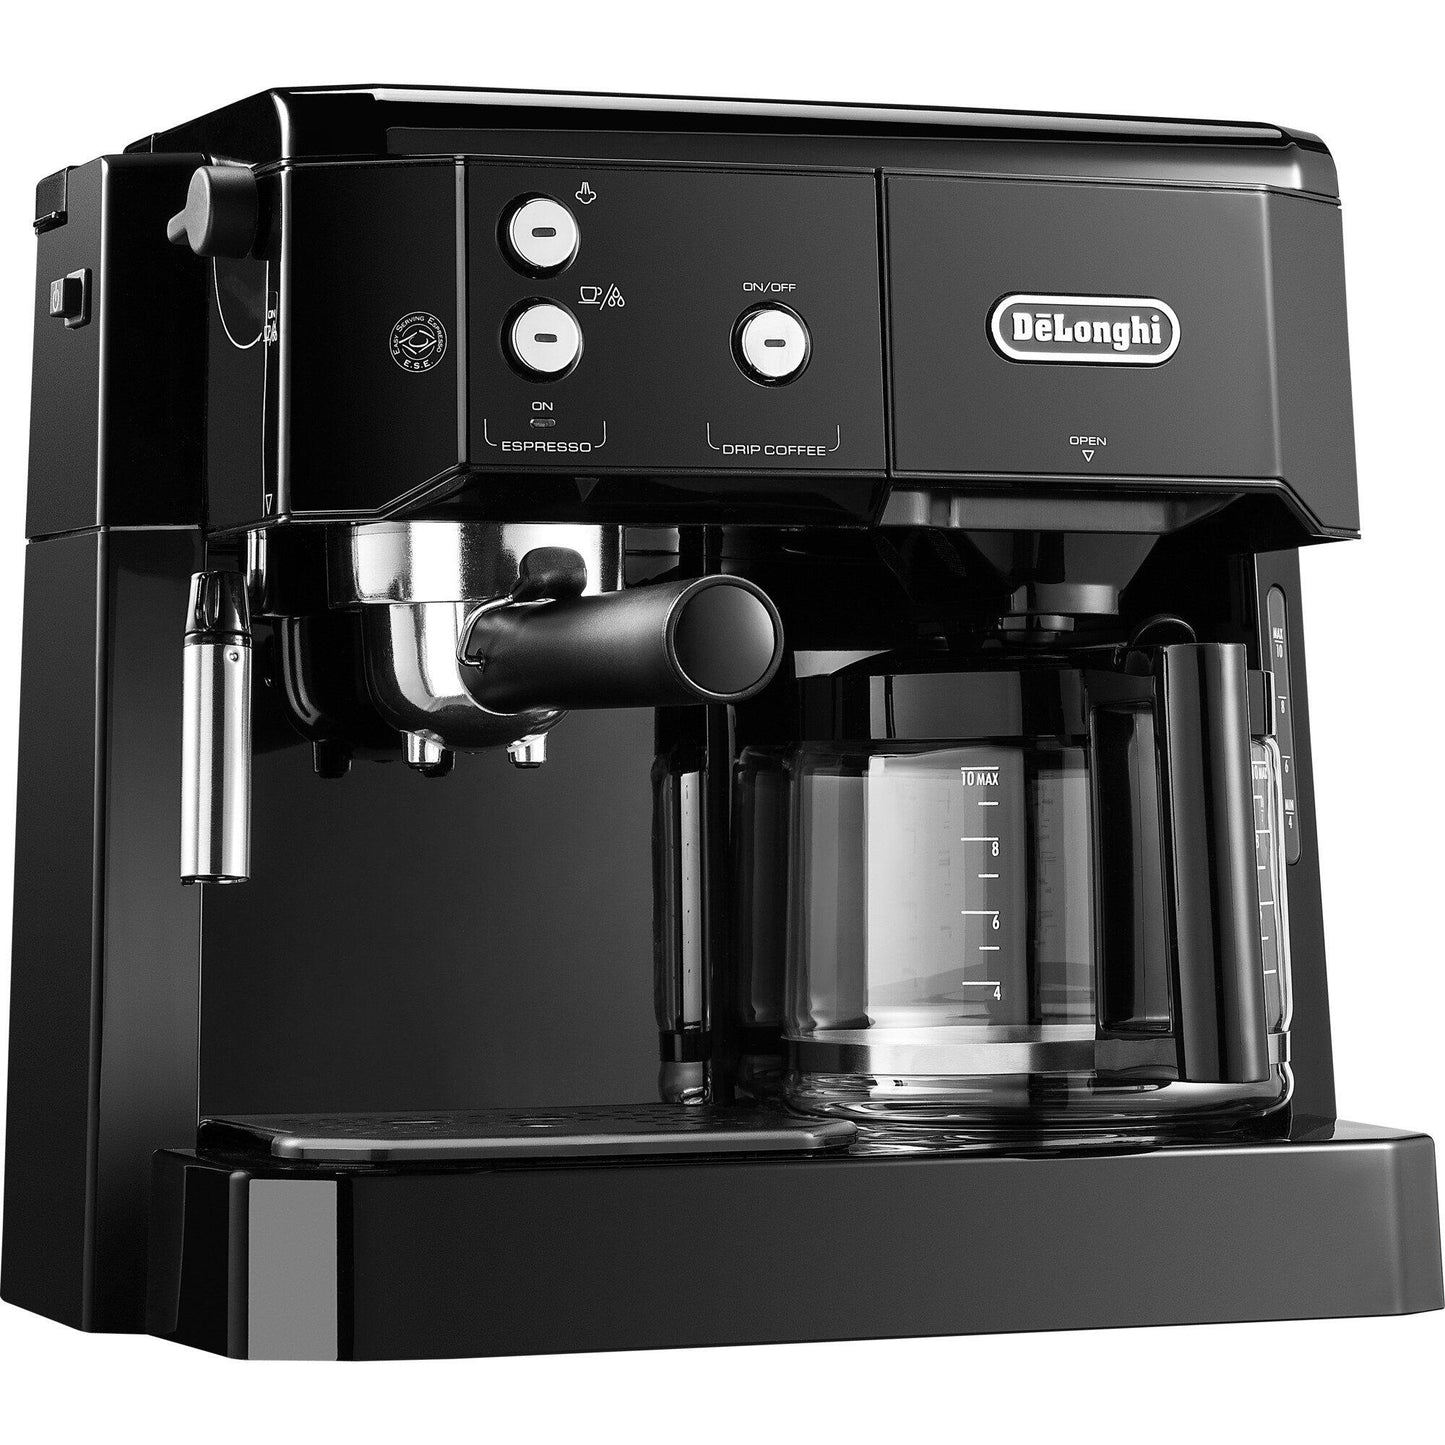 De'Longhi - 2-in1 Dual Function coffee machine (espresso and drip coffee) | Sliver & Black